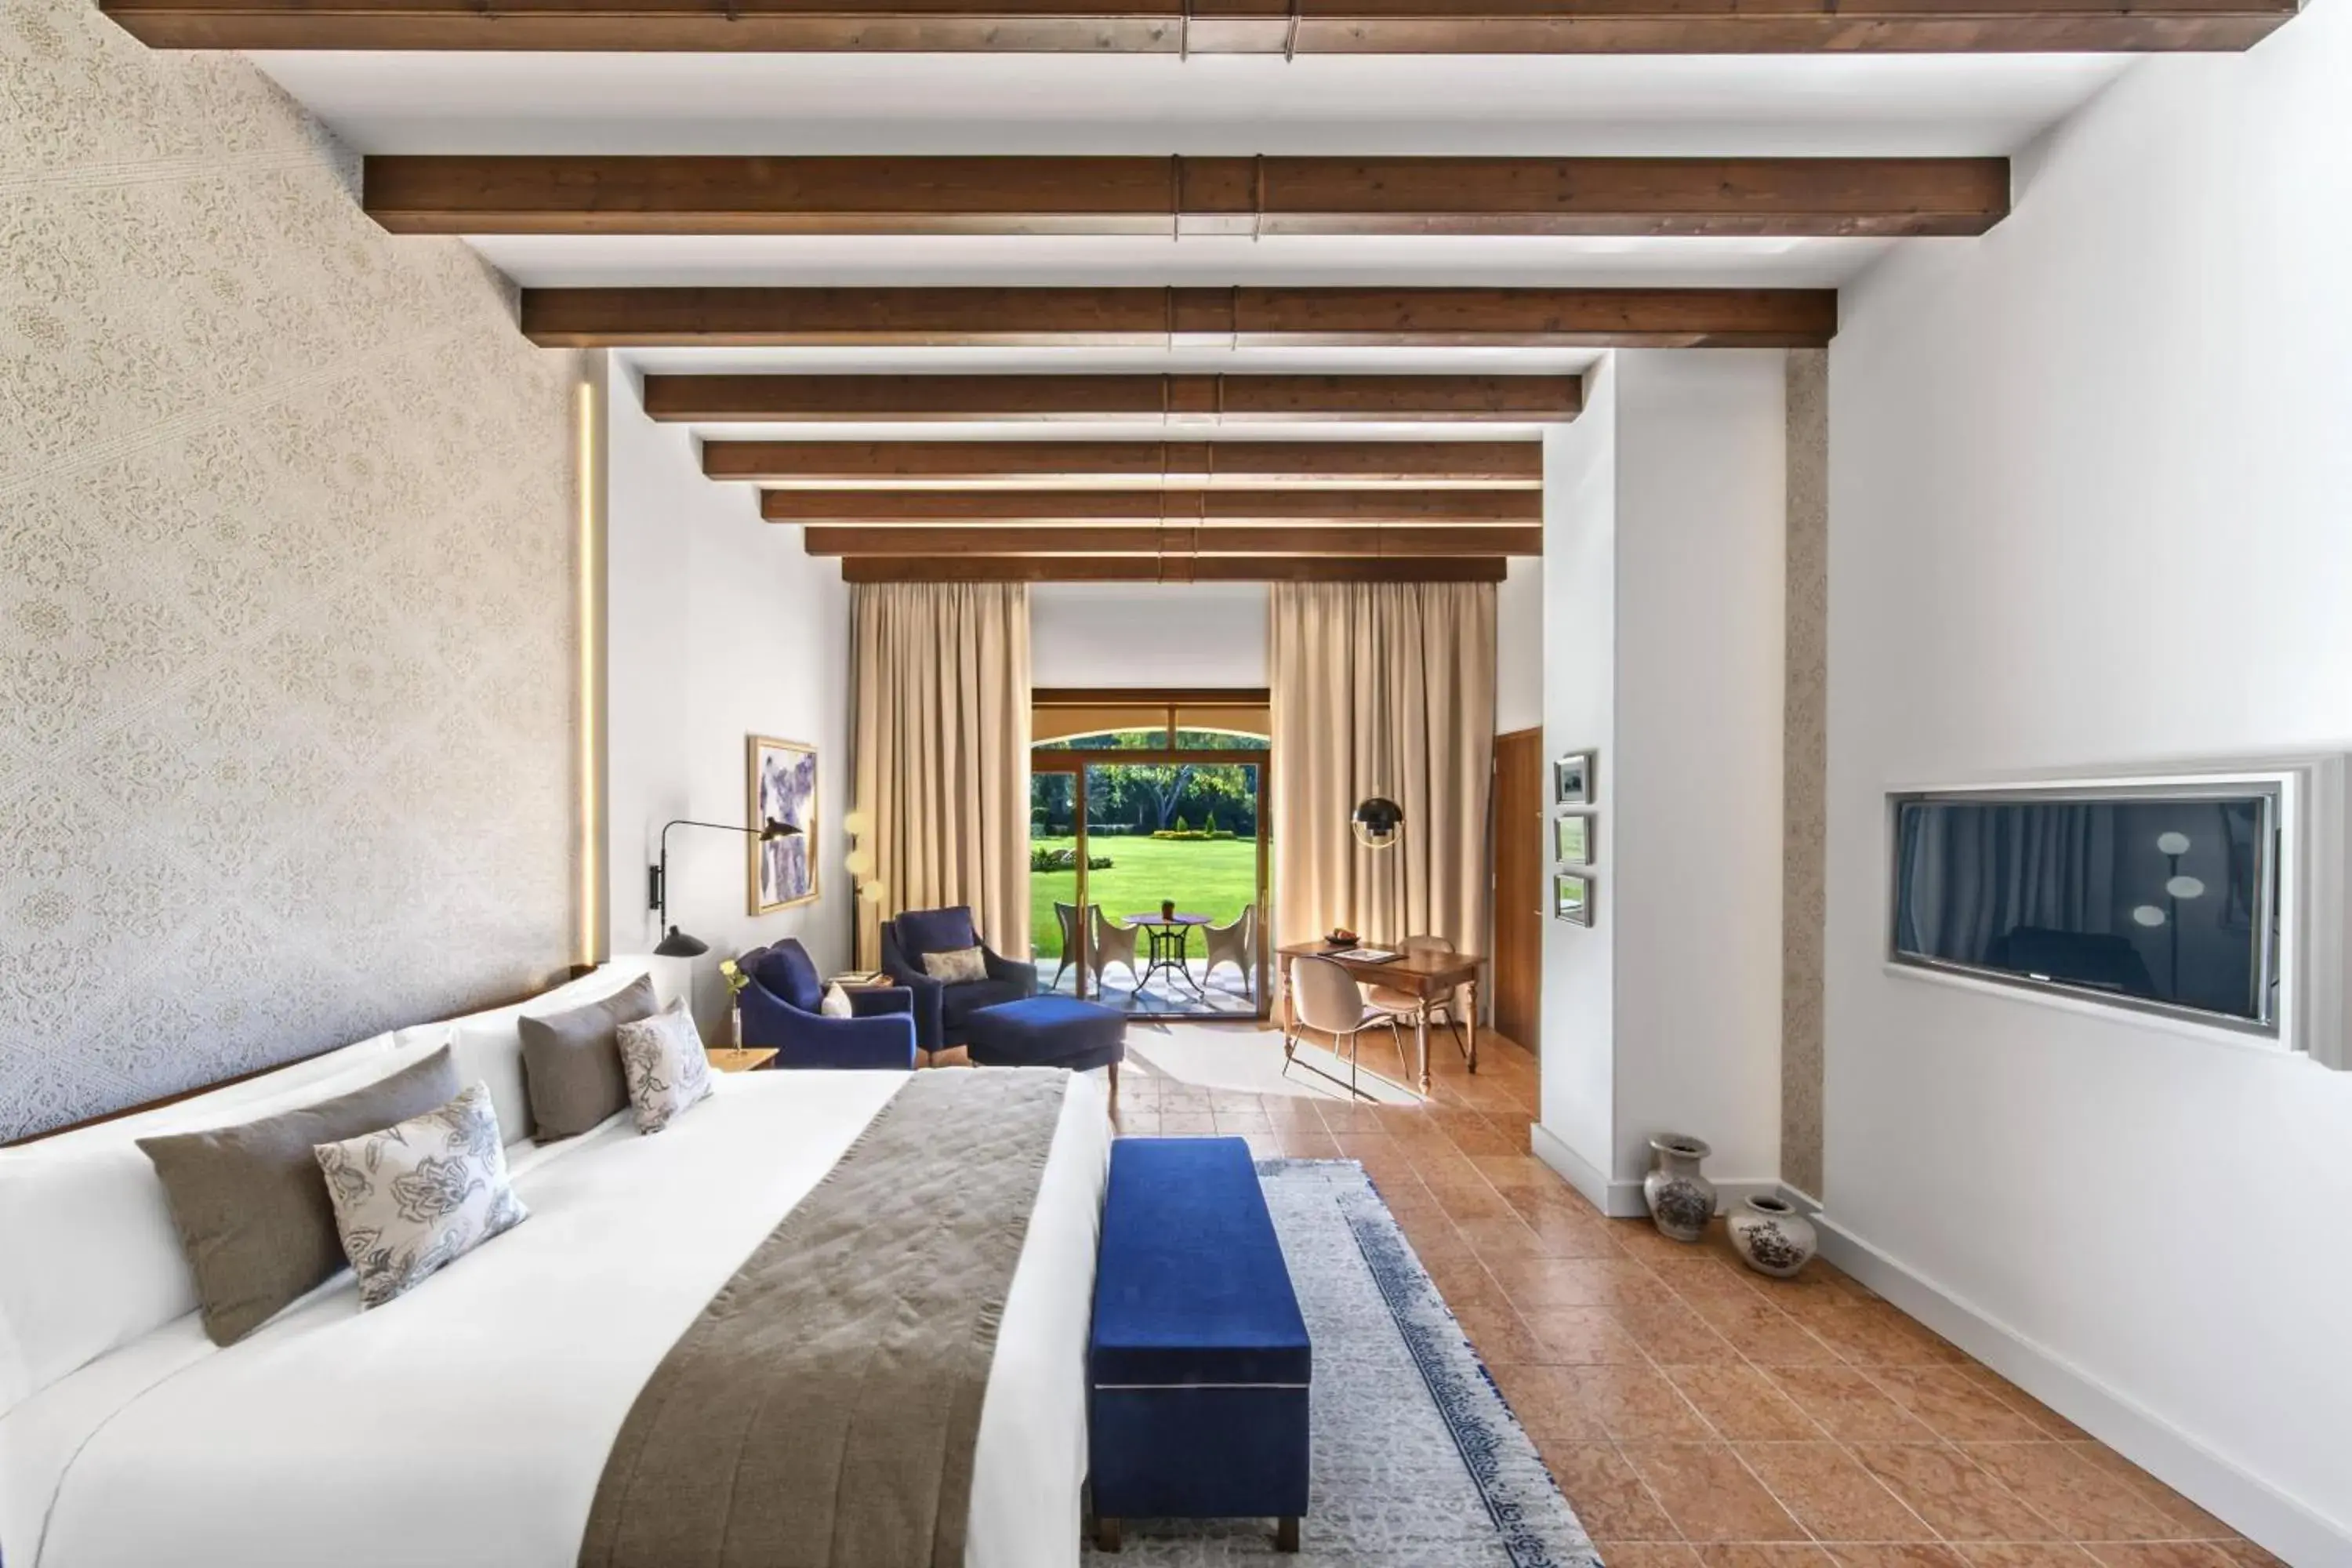 Bedroom in The St. Regis Mardavall Mallorca Resort